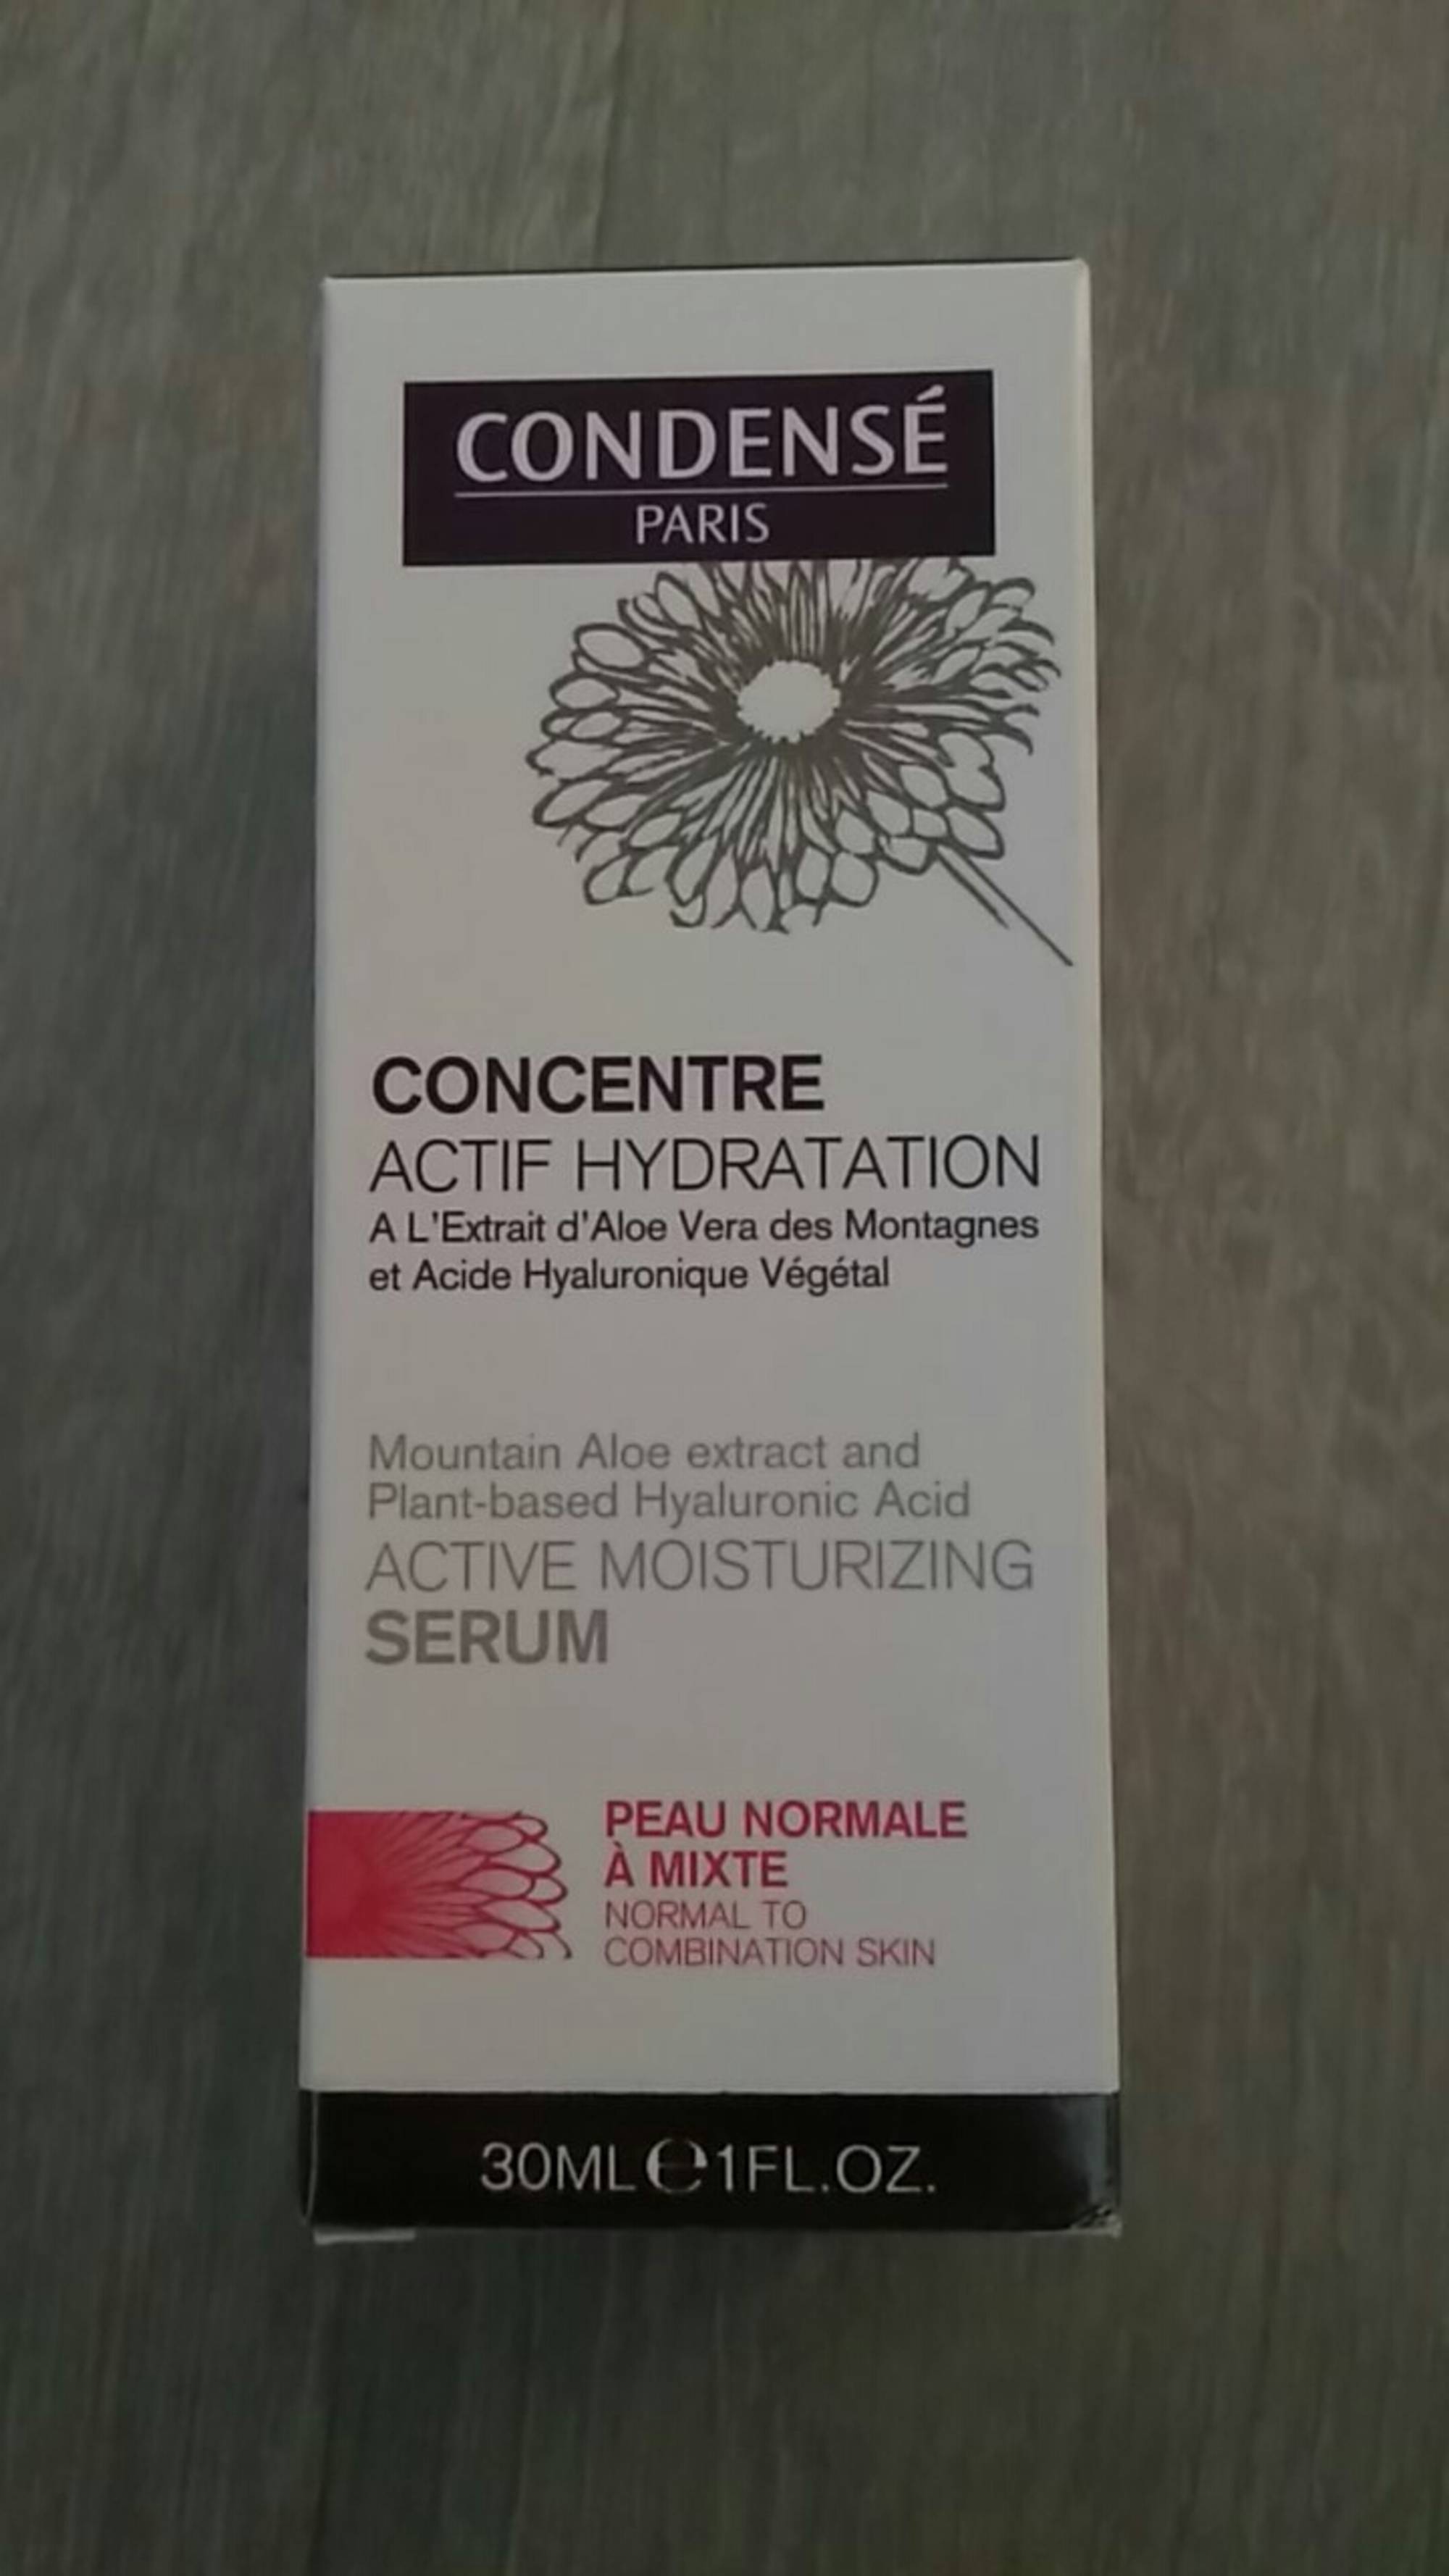 CONDENSÉ - Concentre - Actif hydratation, sérum